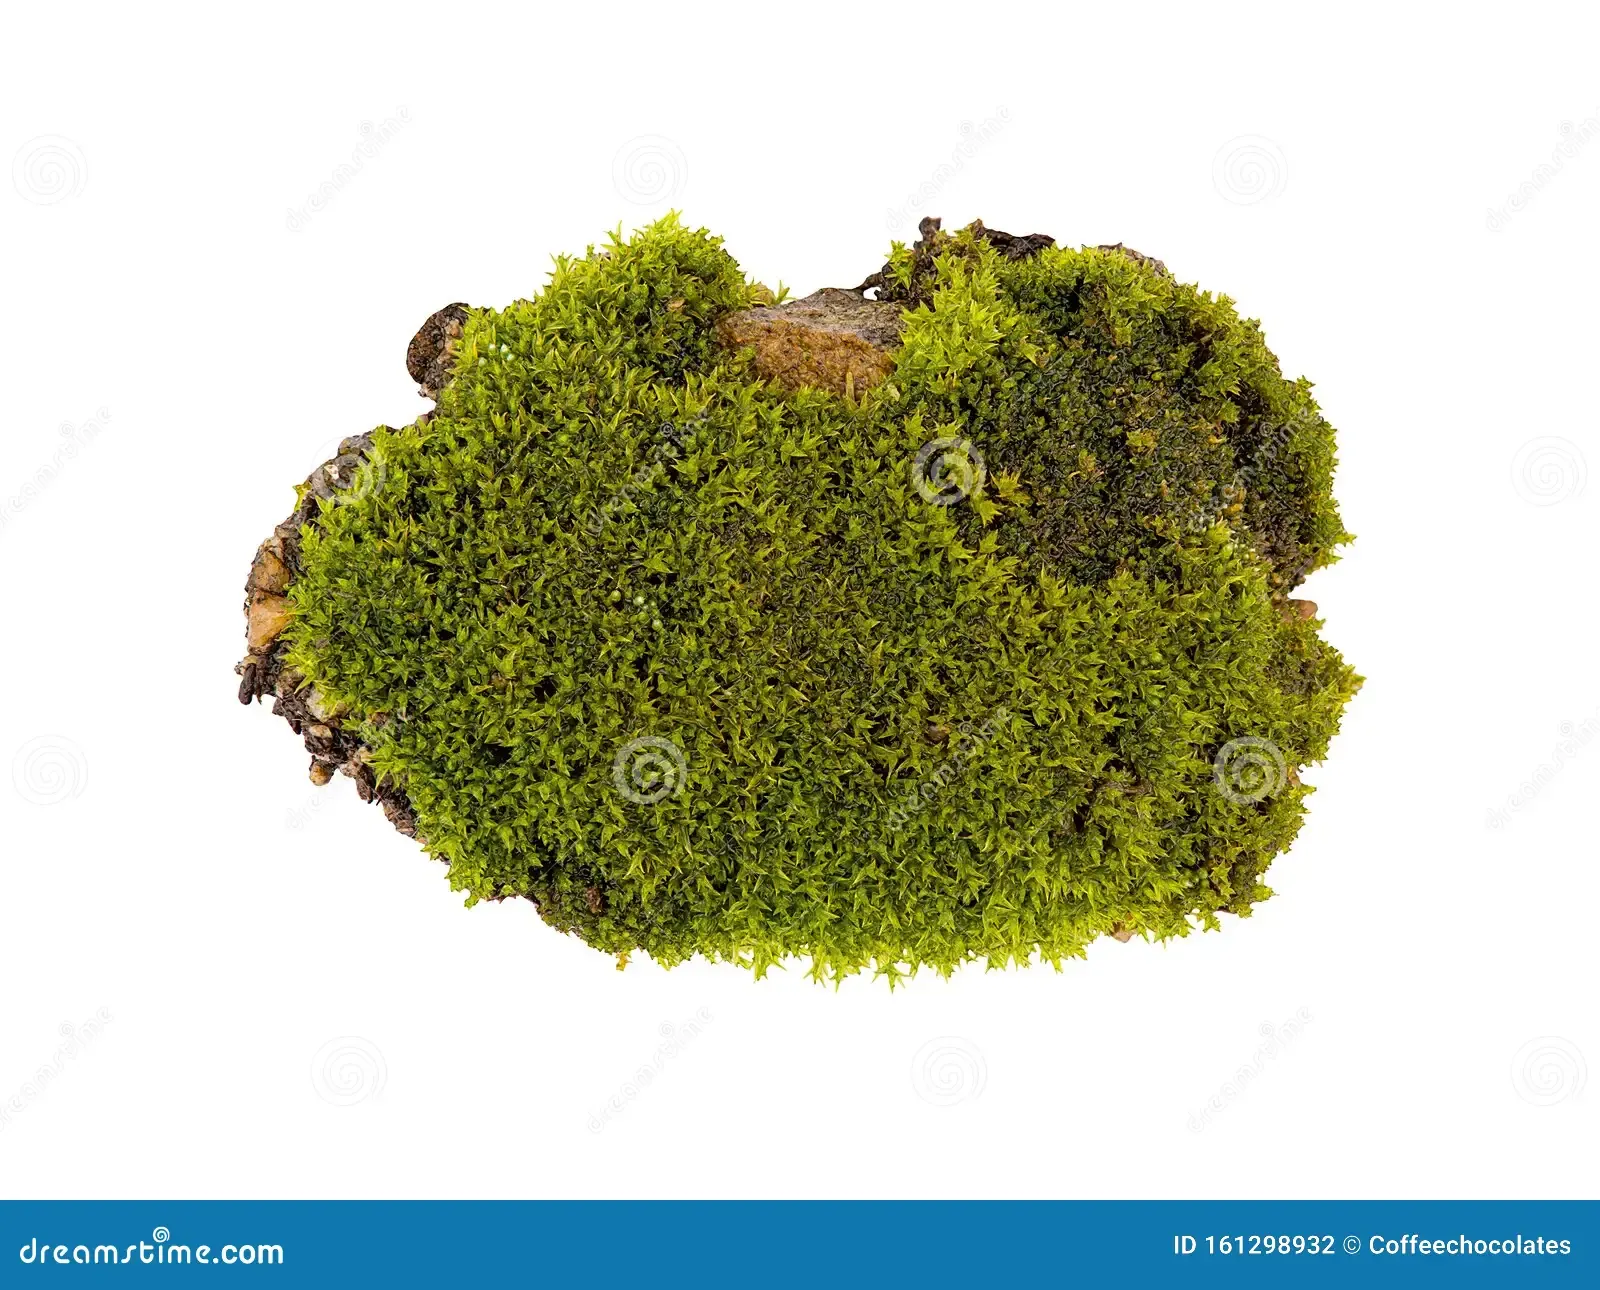 green-moss-isolated-top-view-silvergreen-bryum-moss-tussock-green-moss-isolated-top-view-silvergreen-bryum-moss-161298932.jpg